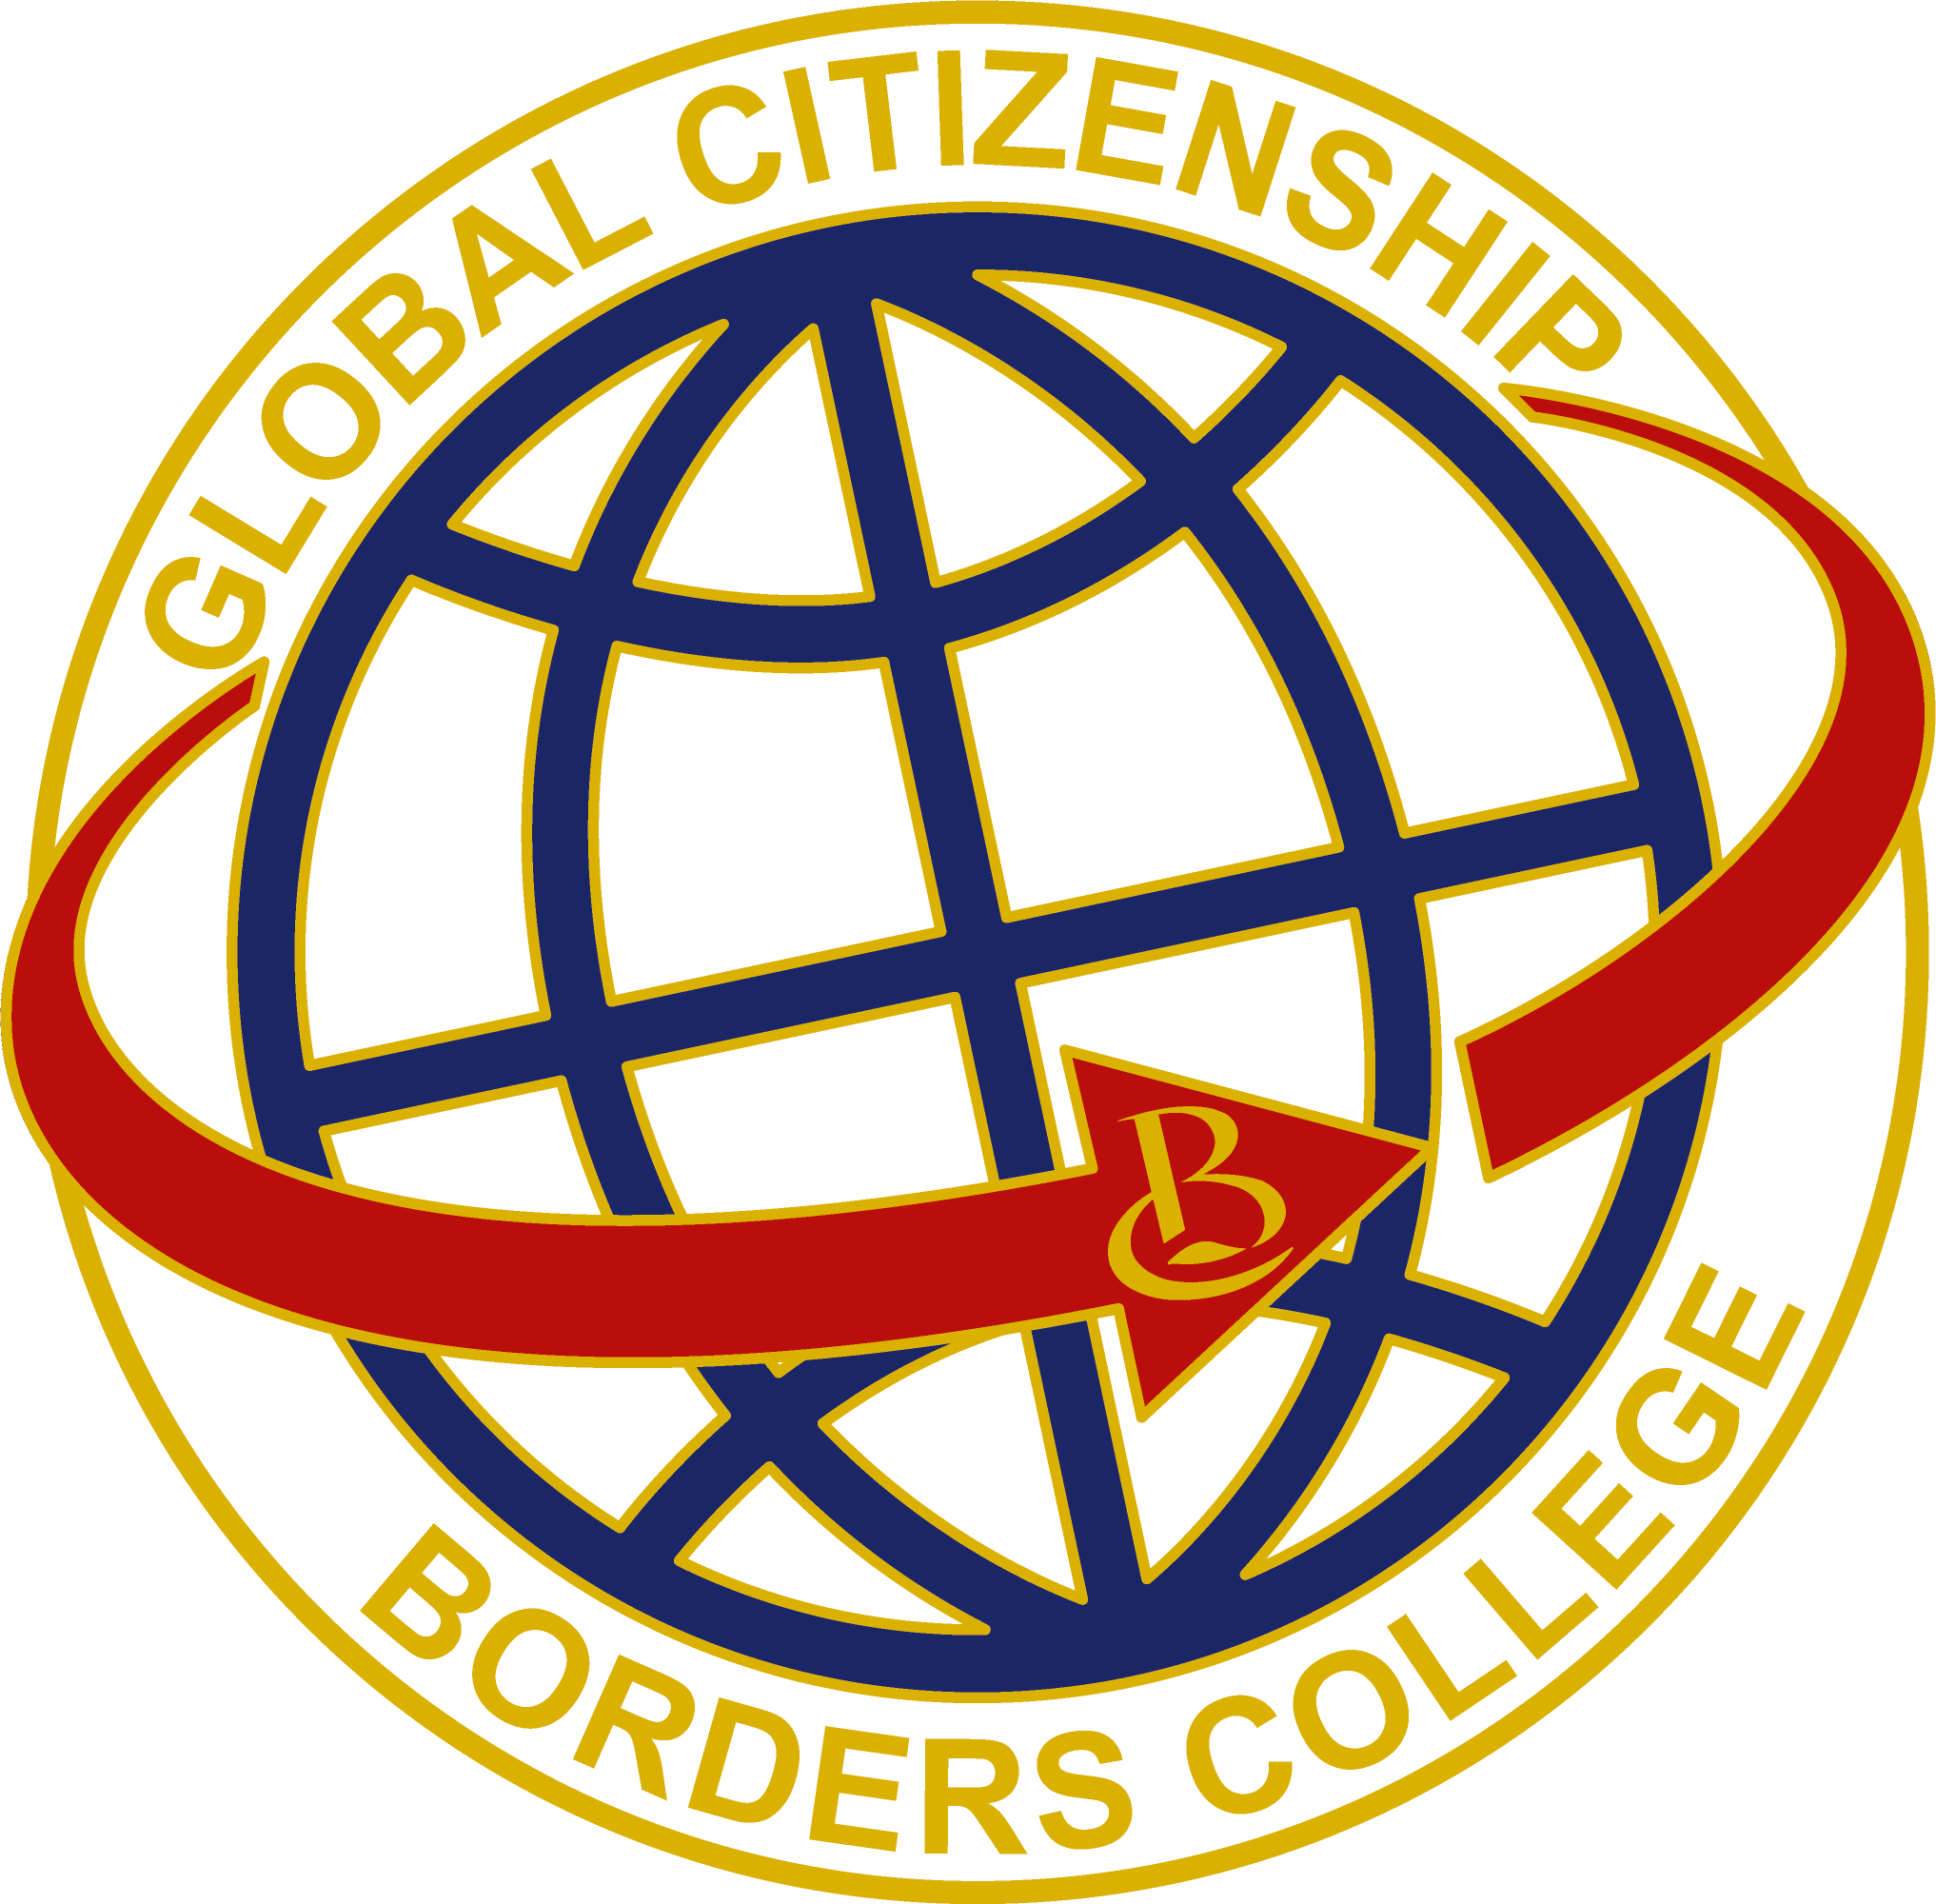 Global Citizenship - Borders College logo